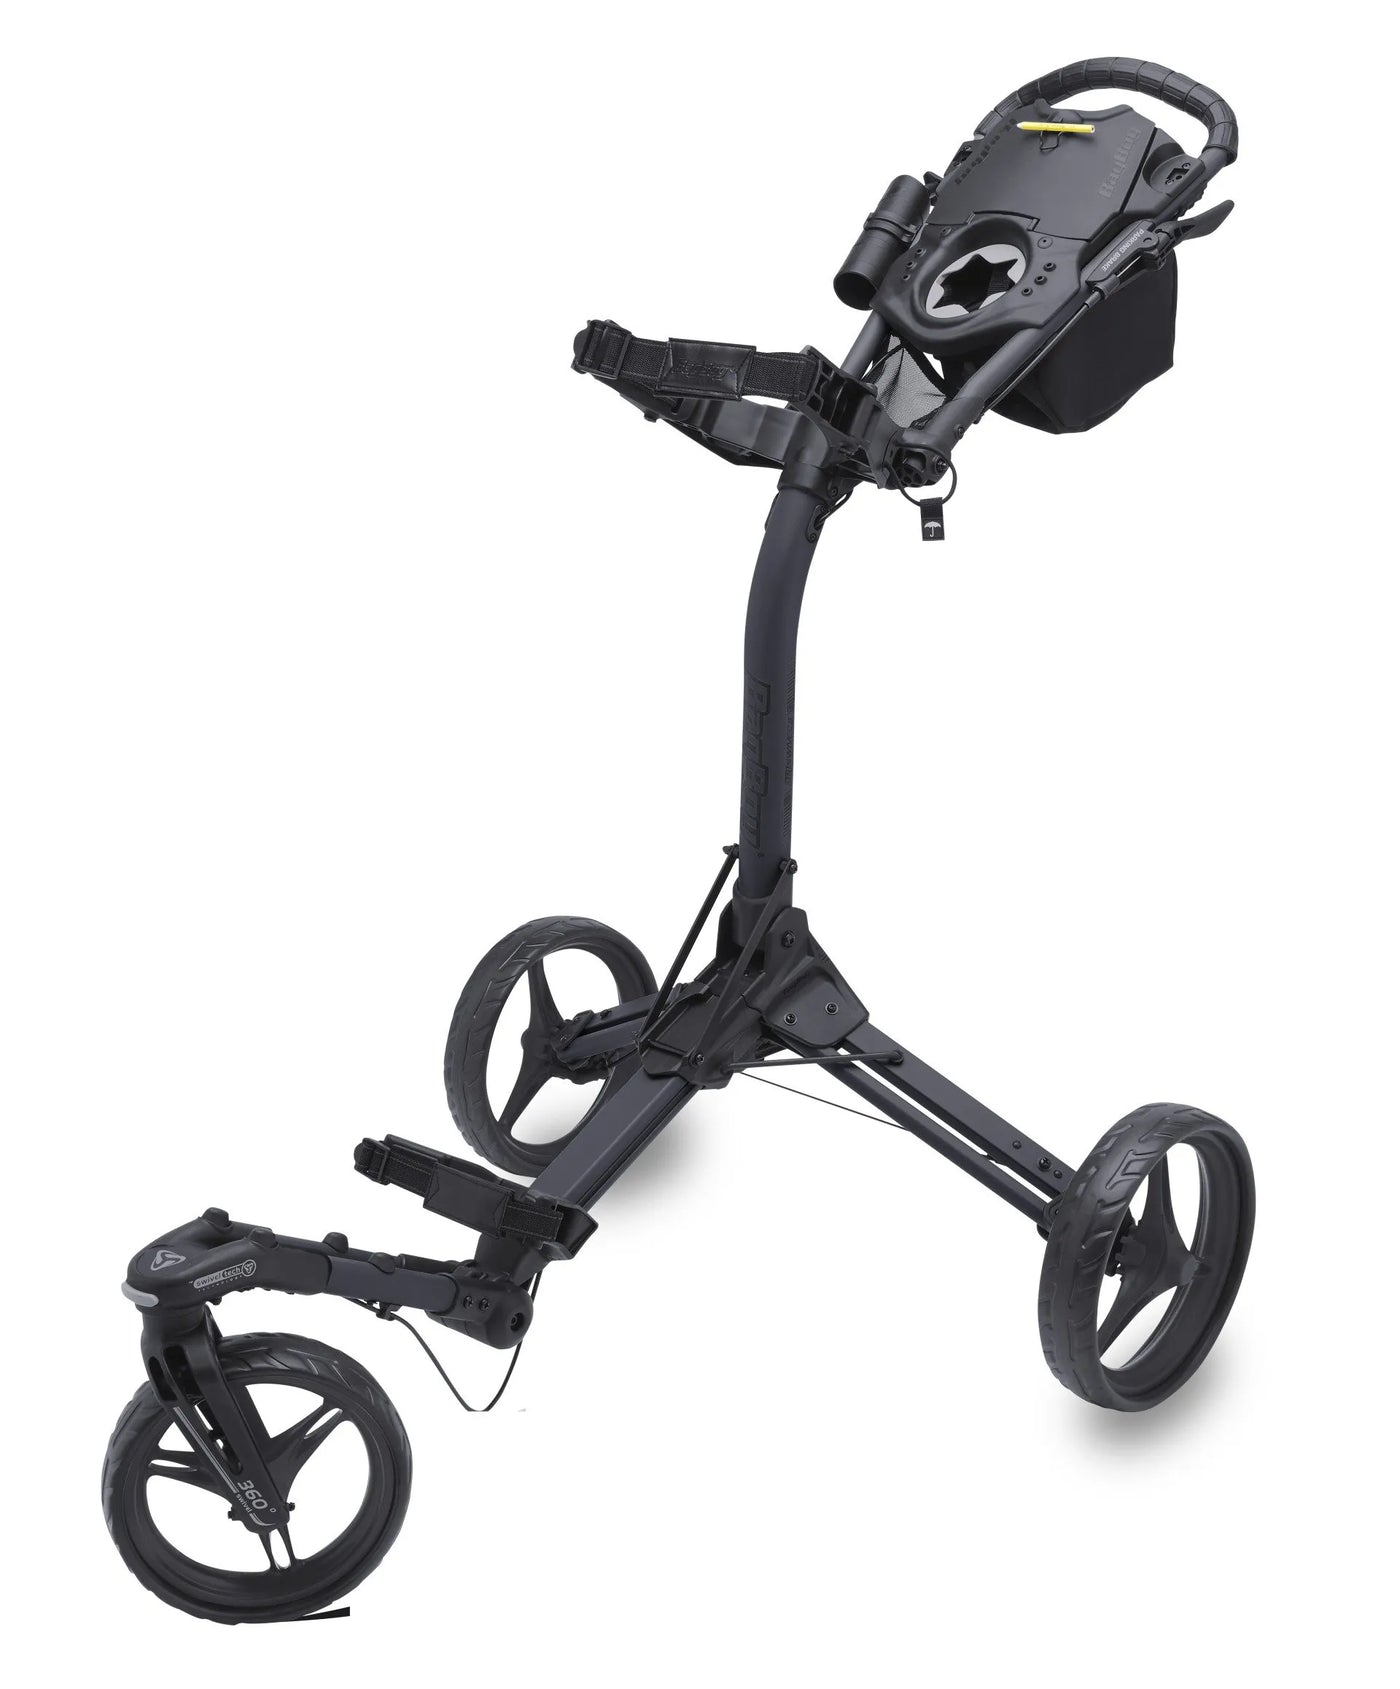 BagBoy chariot de golf à 3 roues Tri Swivel 2.0 - La révolution à 360° avec cadre en aluminium SUPER-LÉGER